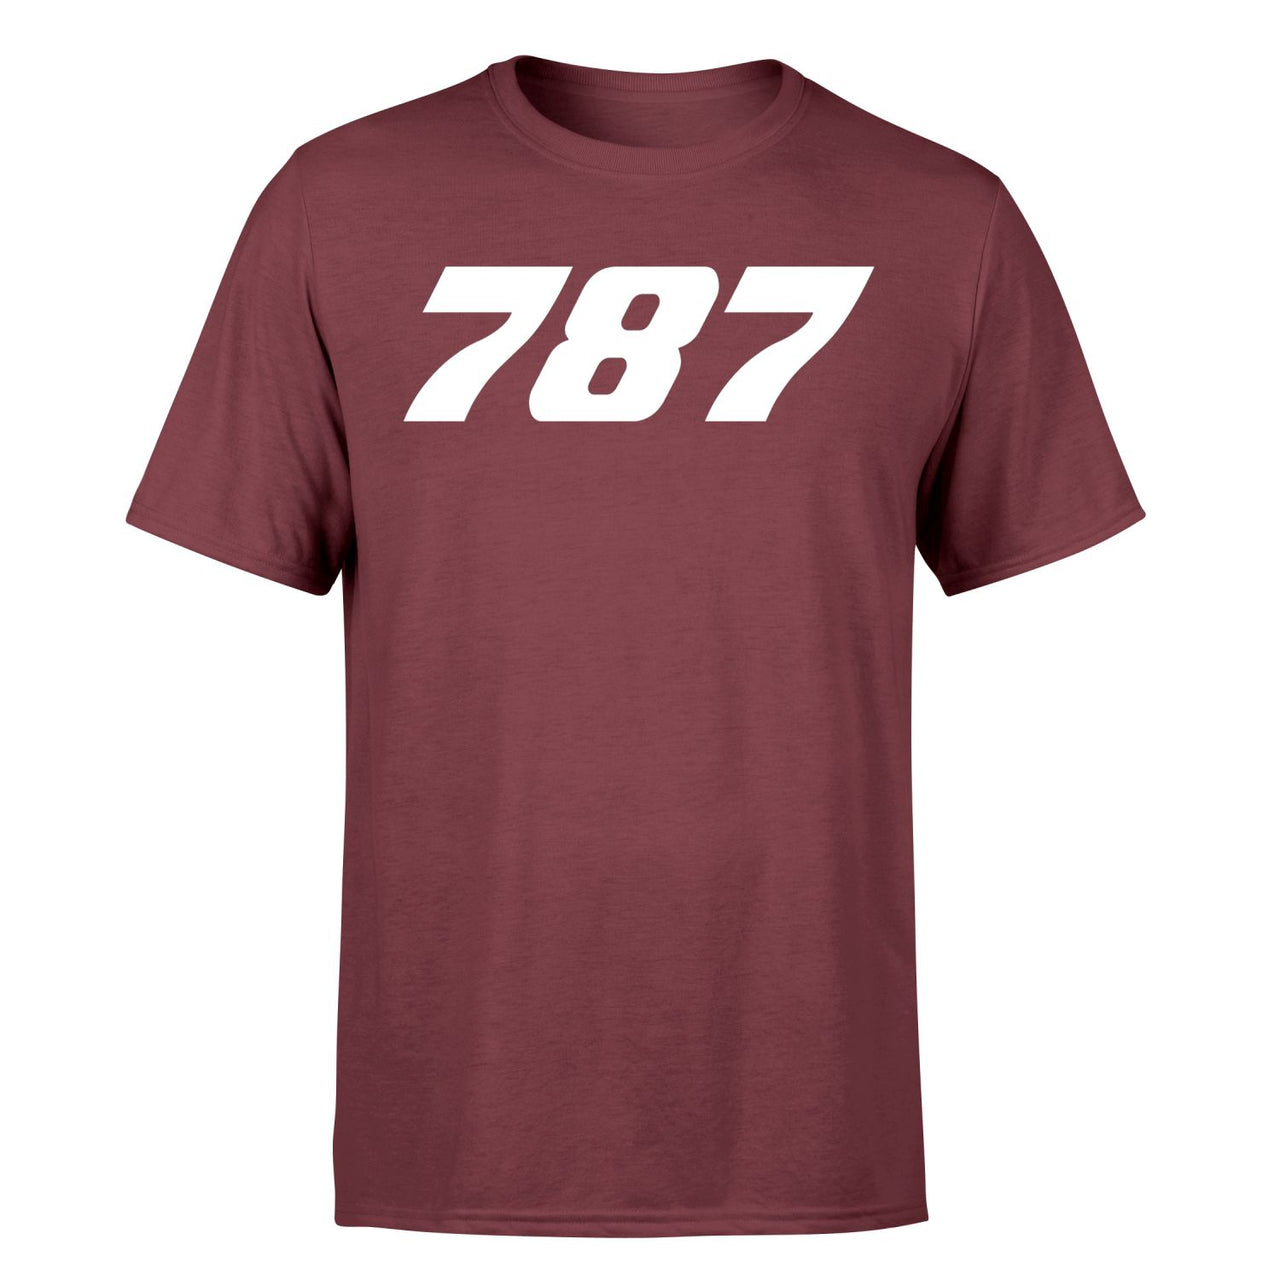 787 Flat Text Designed T-Shirts